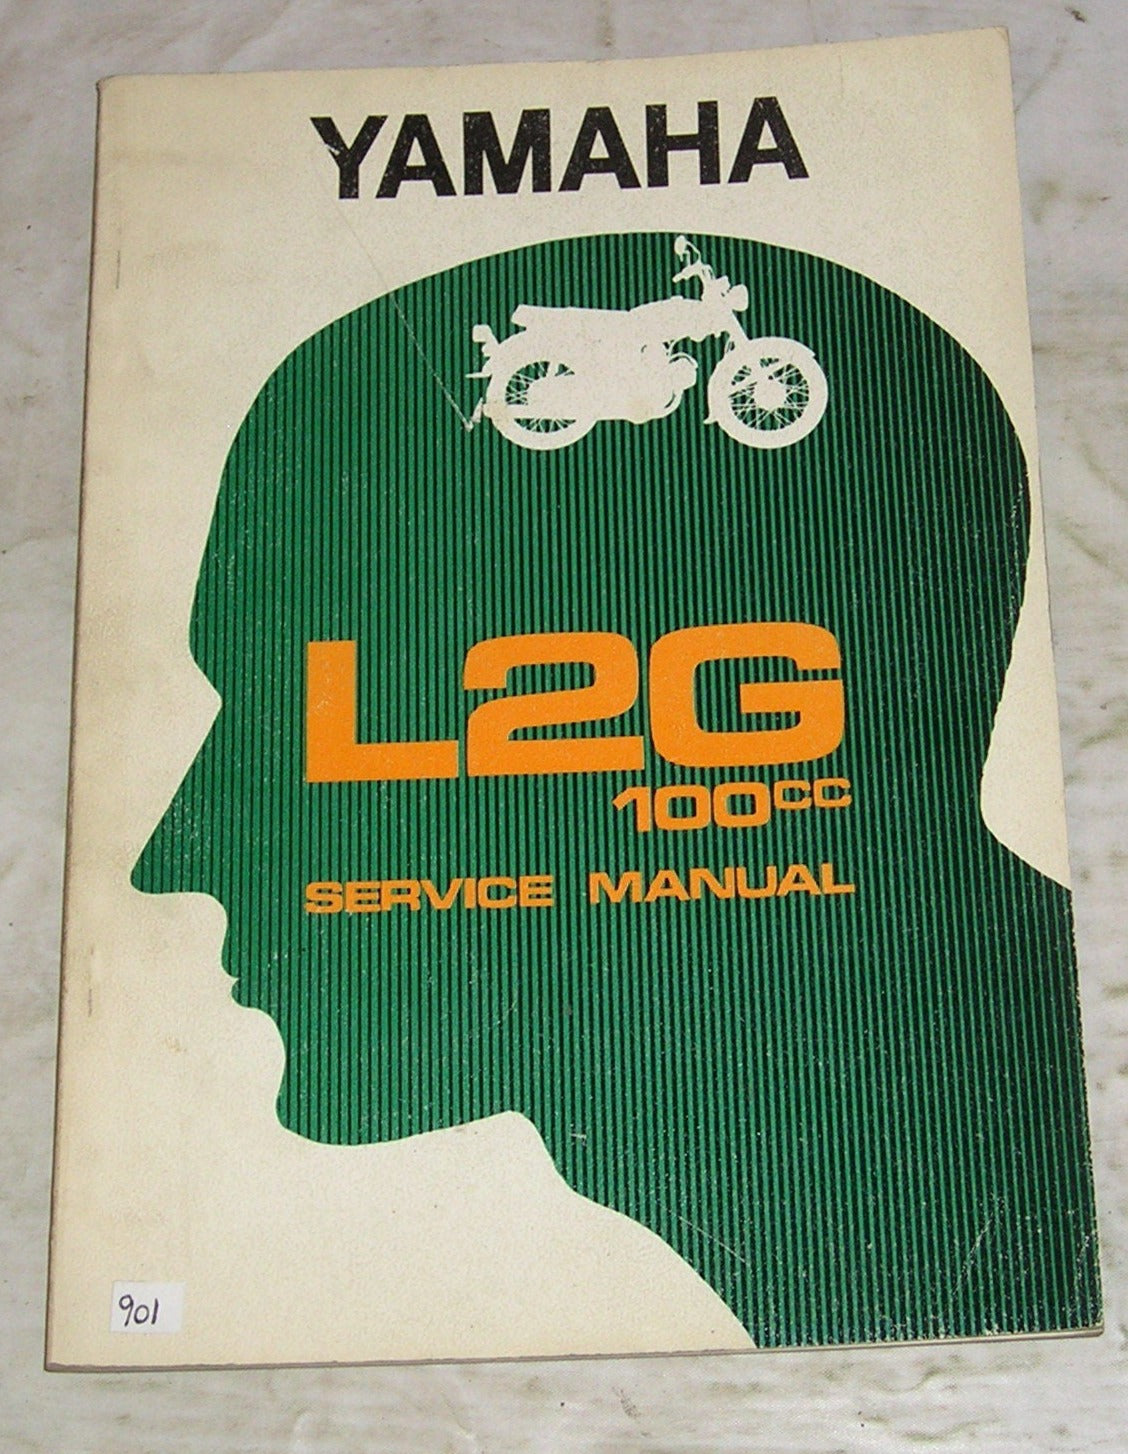 YAMAHA 100  L2  L2G  1971  Factory Service Manual  #901